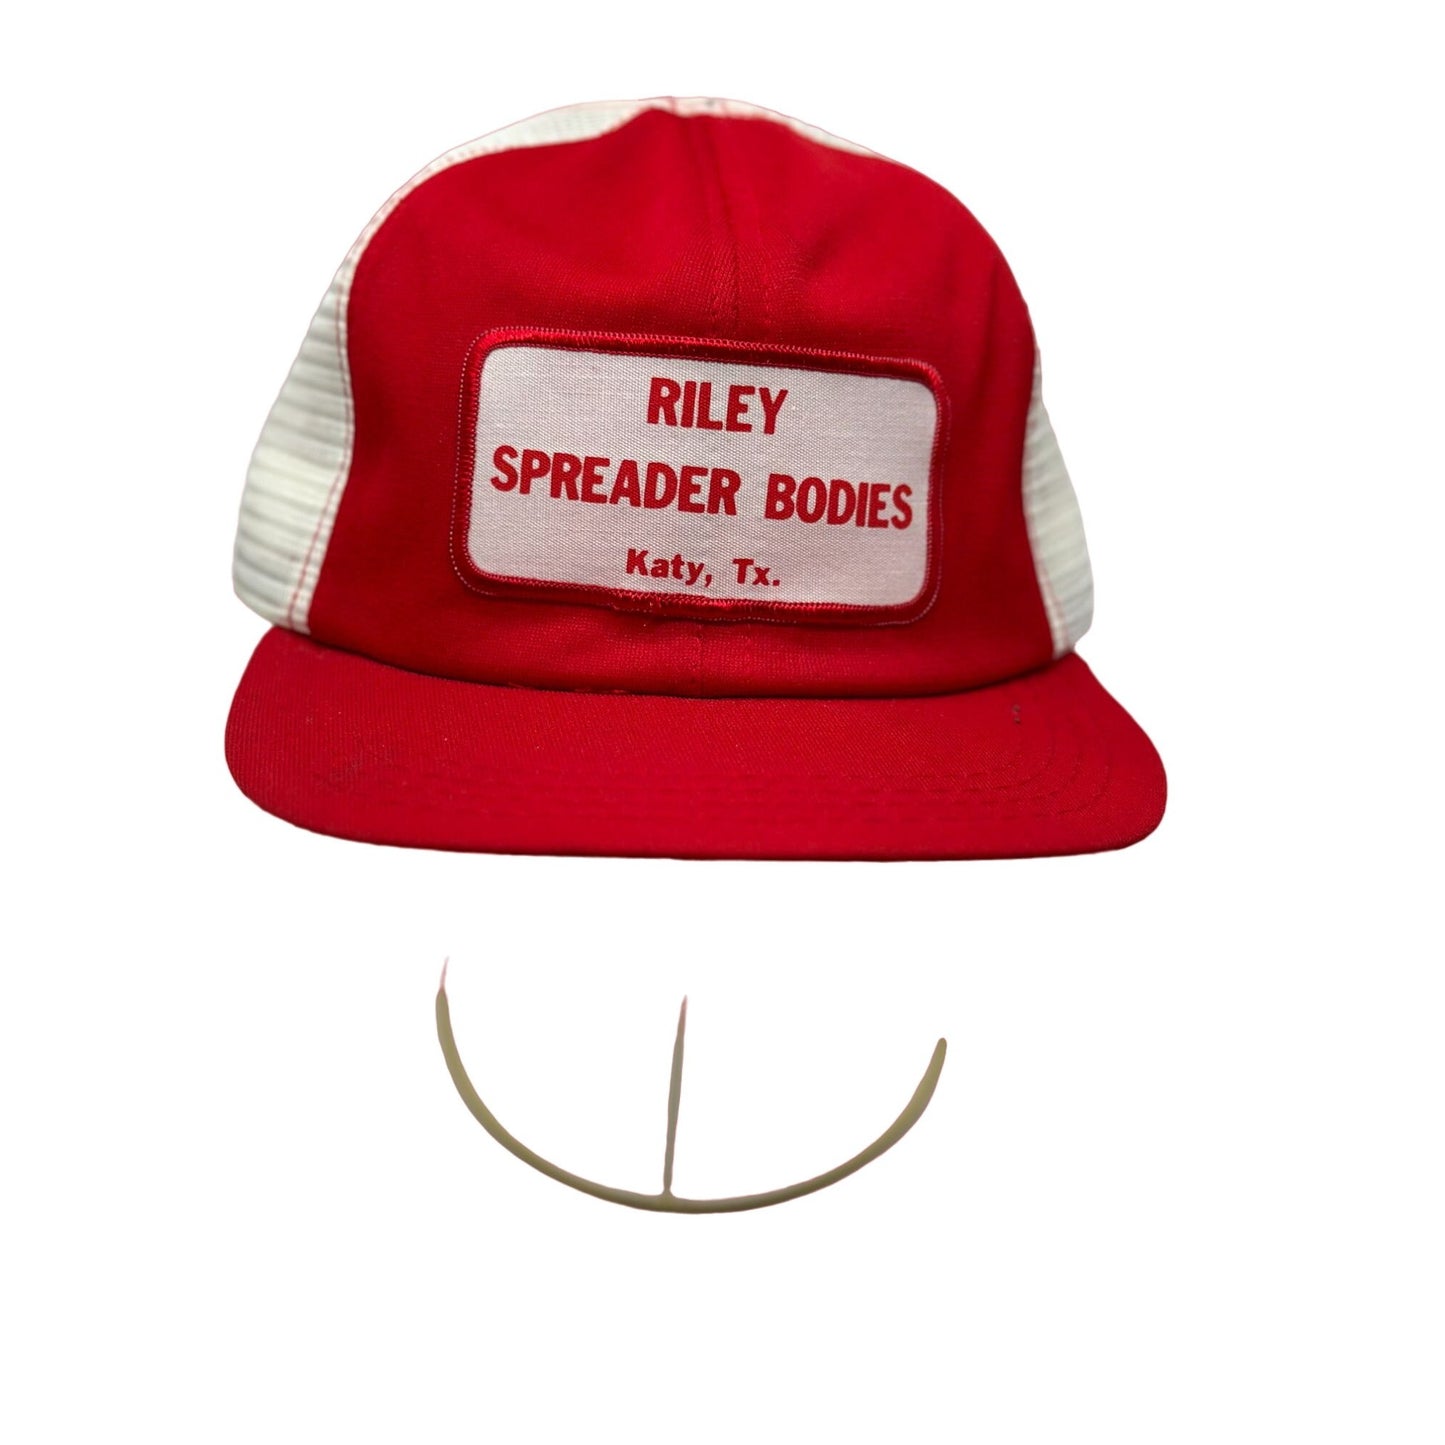 *Vintage Mesh & Foam Snapback Trucker Hat Cap Retro Classic Riley Spreader Bodies